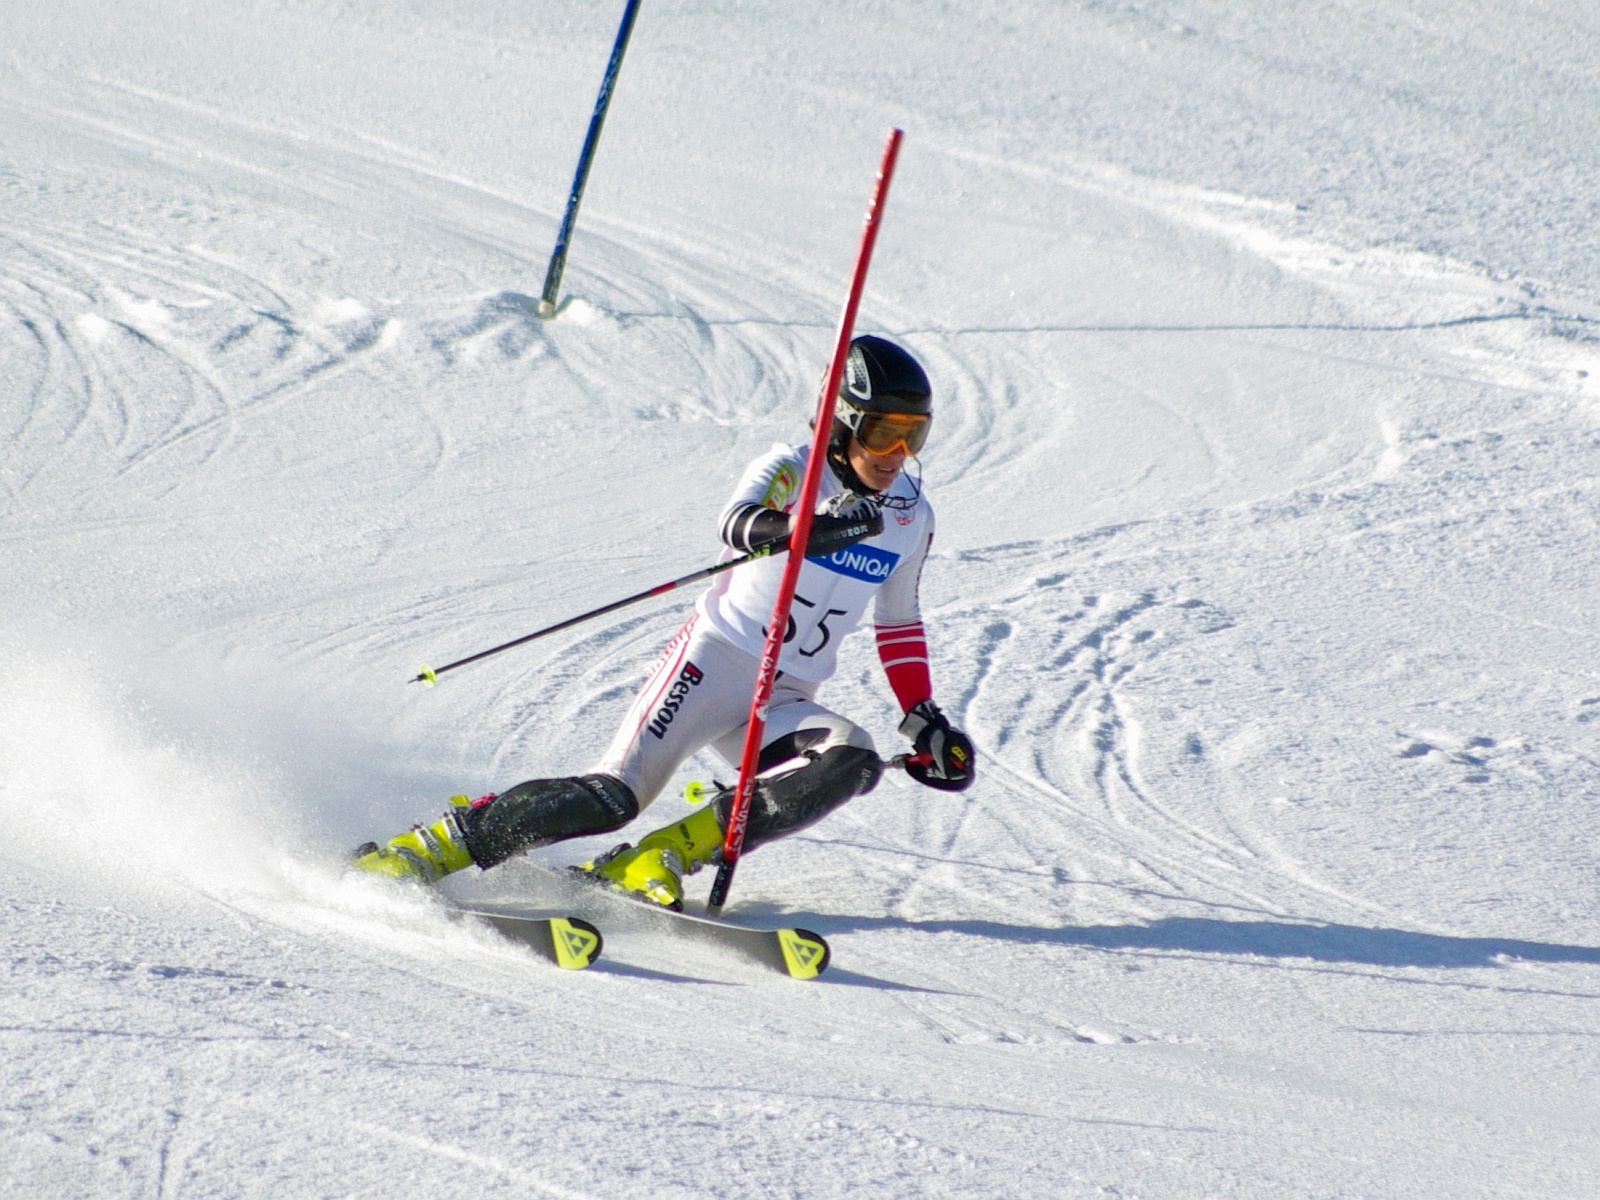 Skiing where. Лыжный спорт слалом. Слалом (горнолыжный спорт). Спуск слалом. Спуск на лыжах слалом.